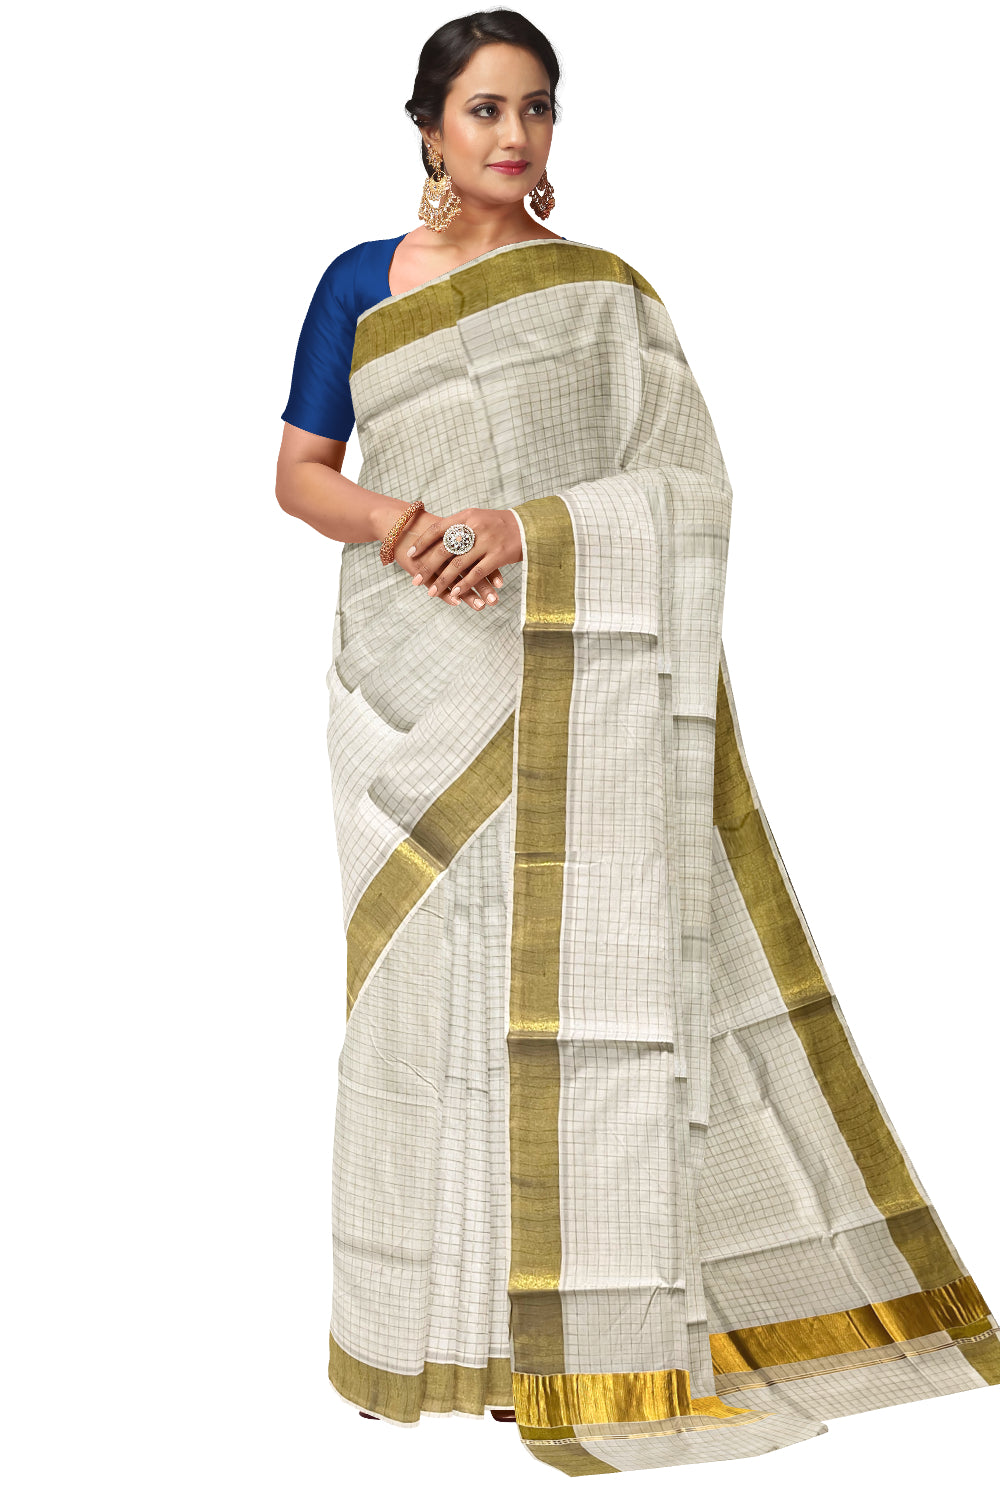 Pure Cotton Kerala Saree with Kasavu Small Check Designs Across Body